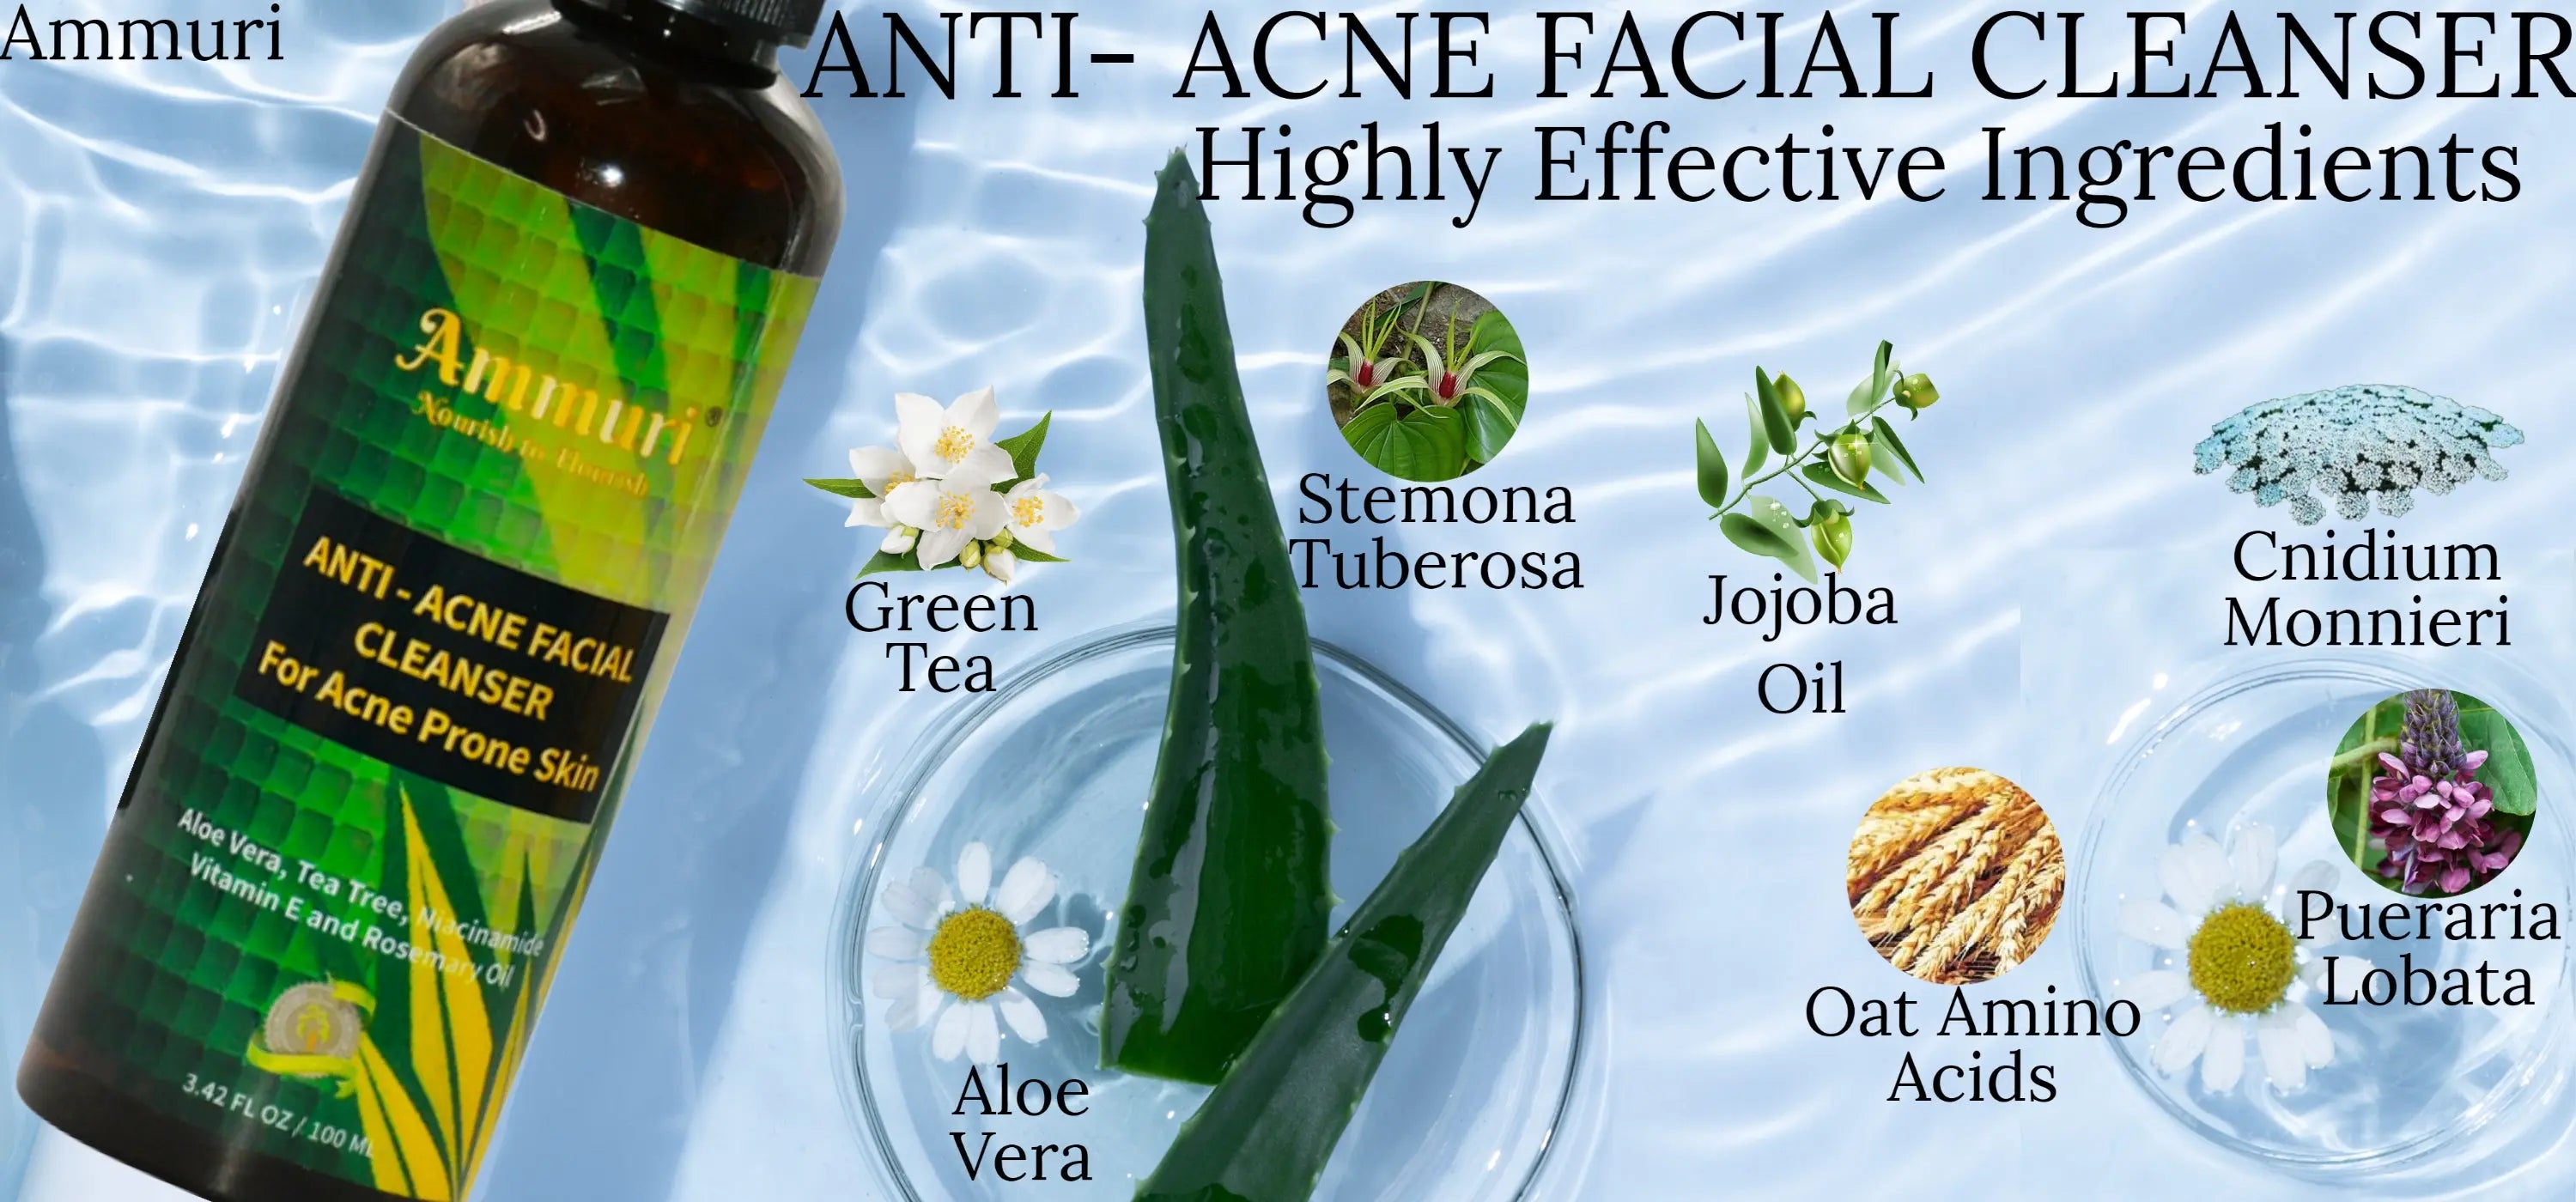 Ammuri Anti Acne Facial Cleanser with added Aloe Vera and Tea Tree Plus Niacinamide Ammuri Skincare